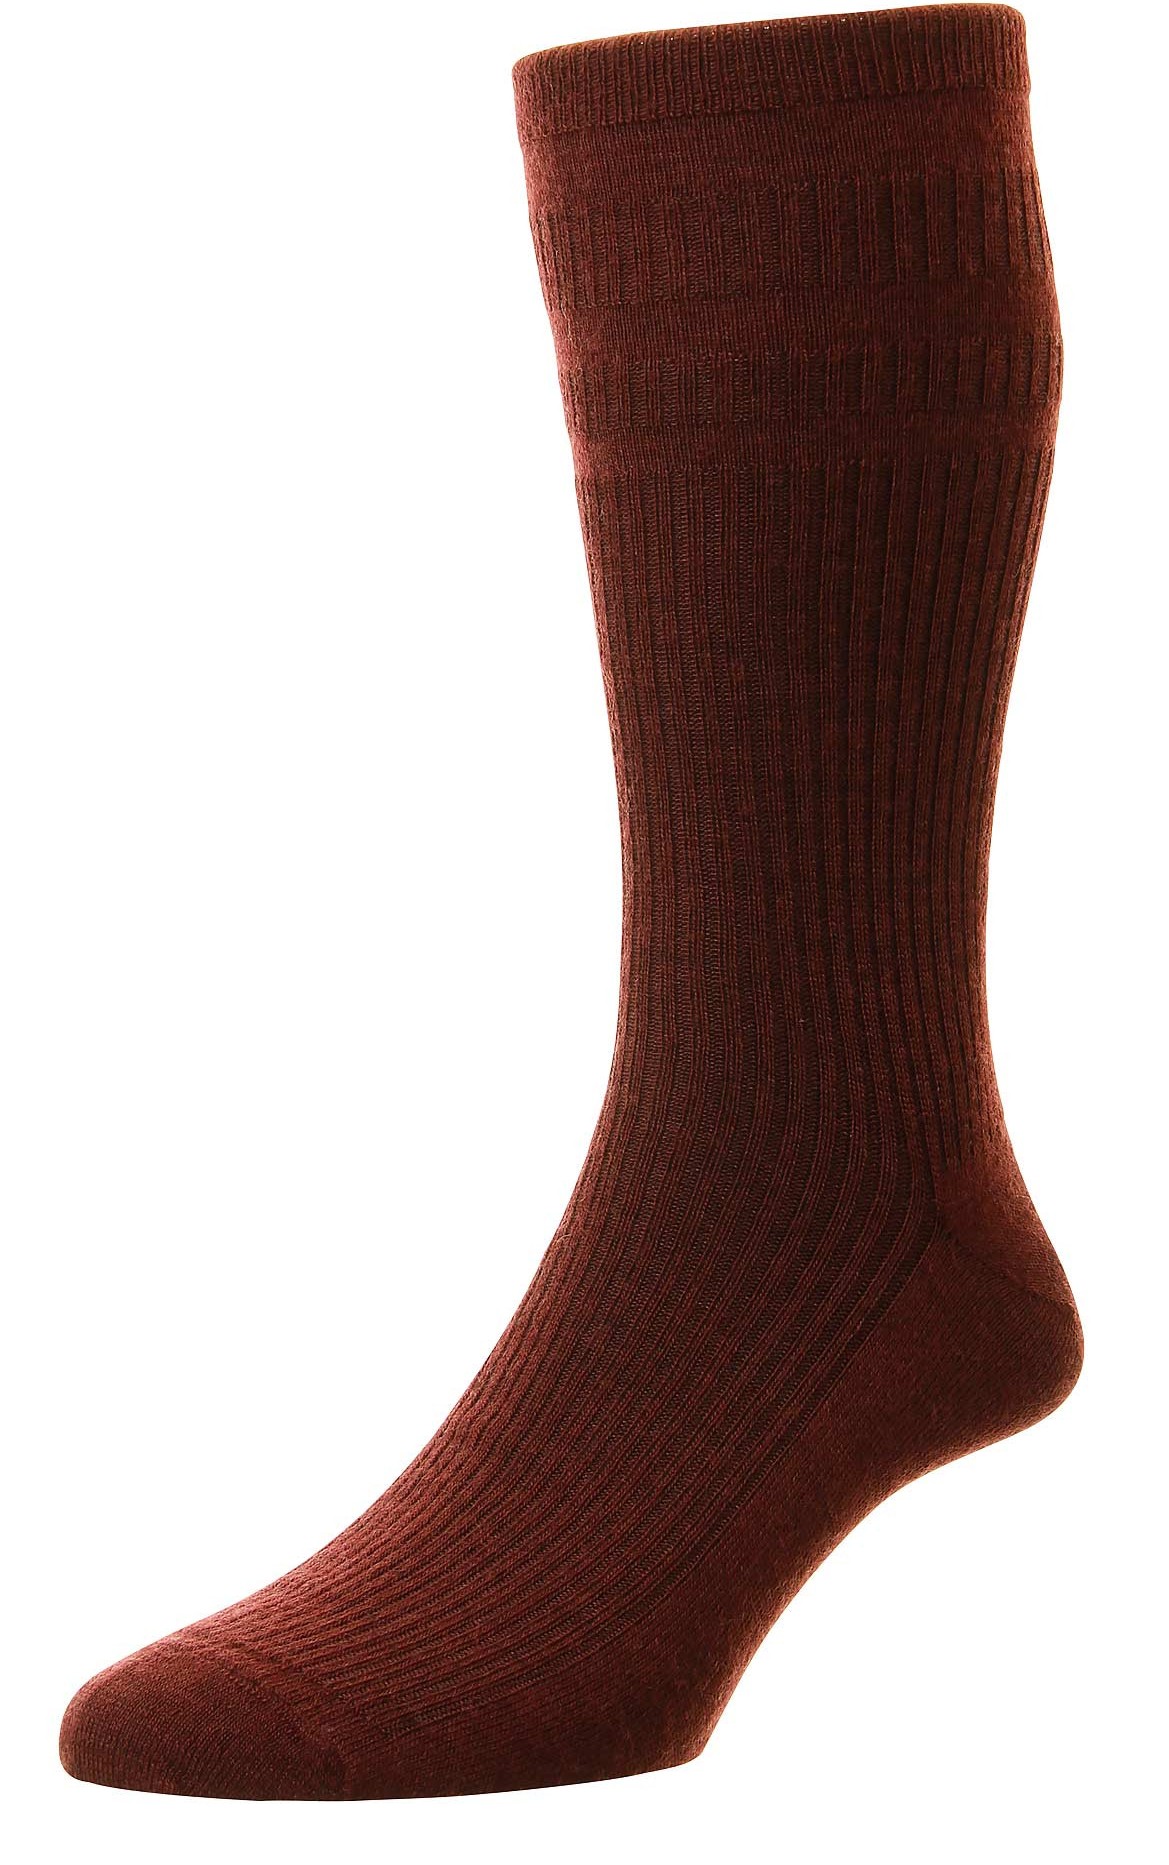 HJ90 Softop Socks Burgundy Size 6-11